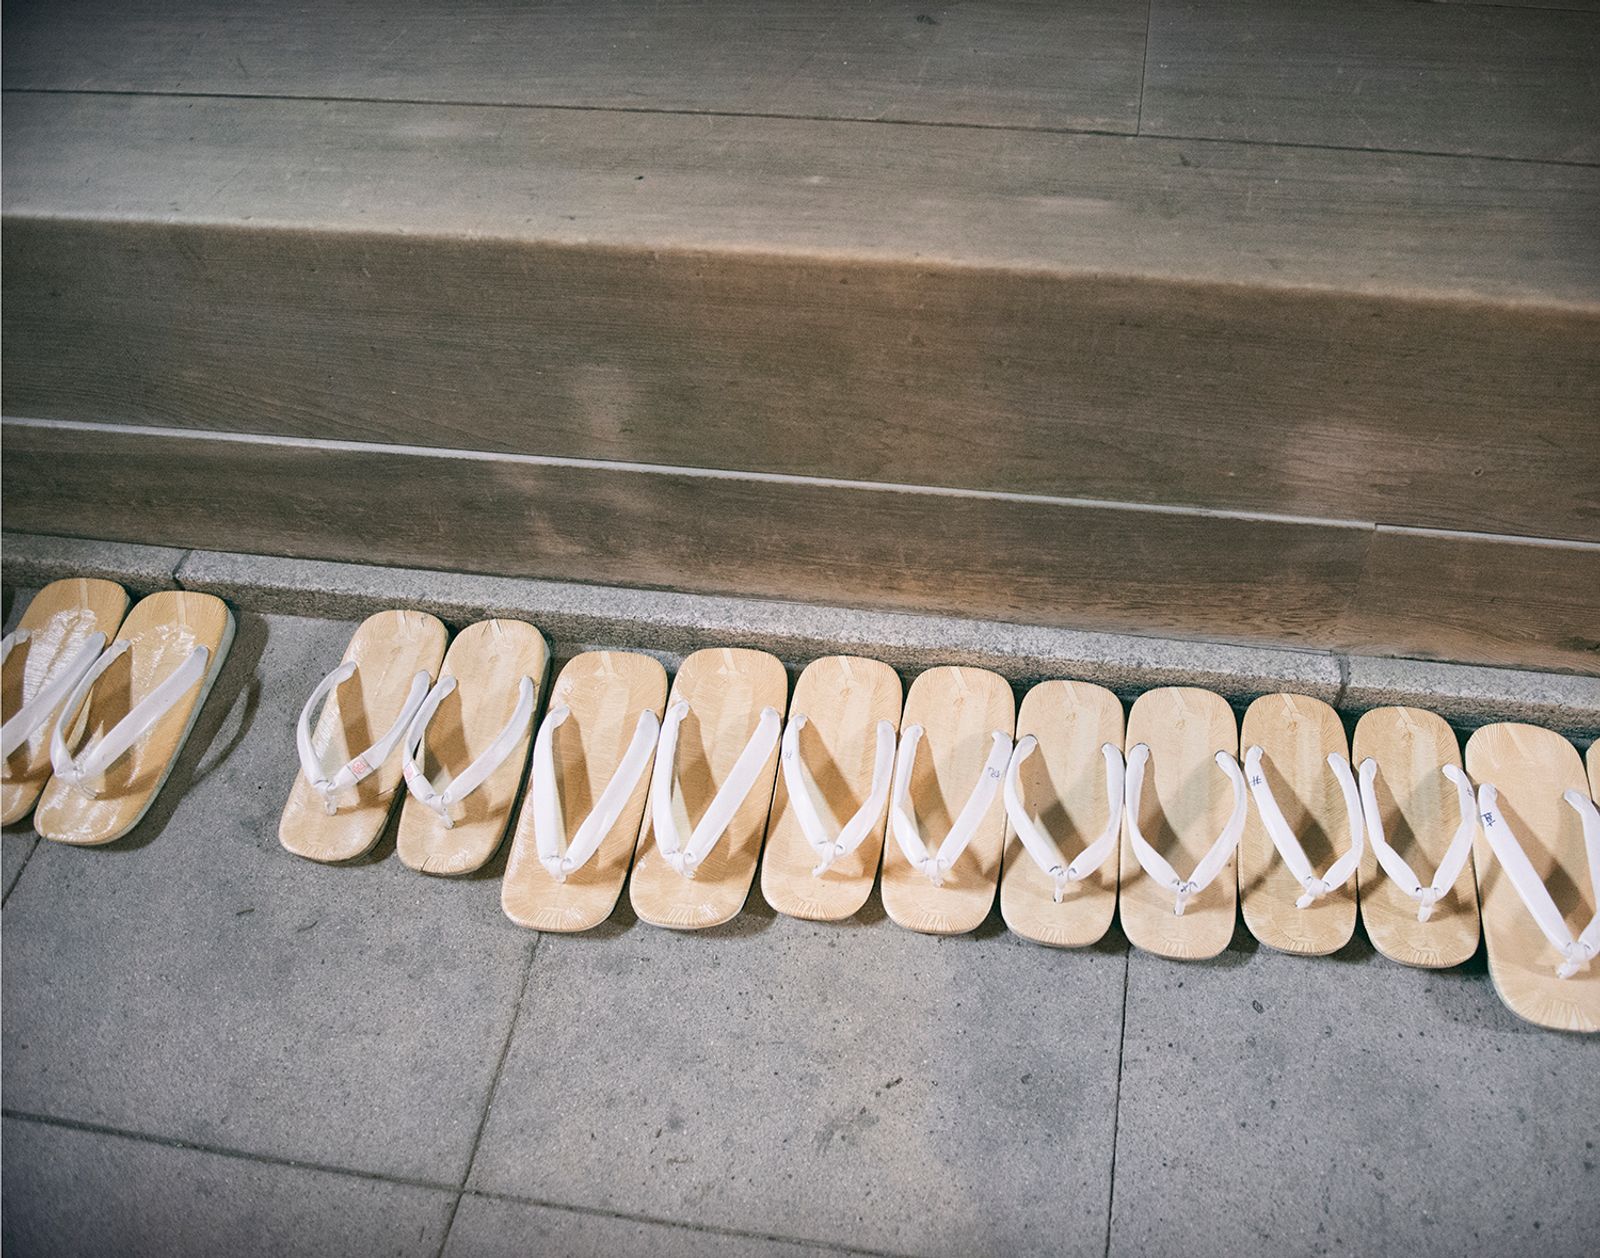 © Lieh Sugai - Kannushi (Shinto priest) zouri sandals lined up inside the shrine.